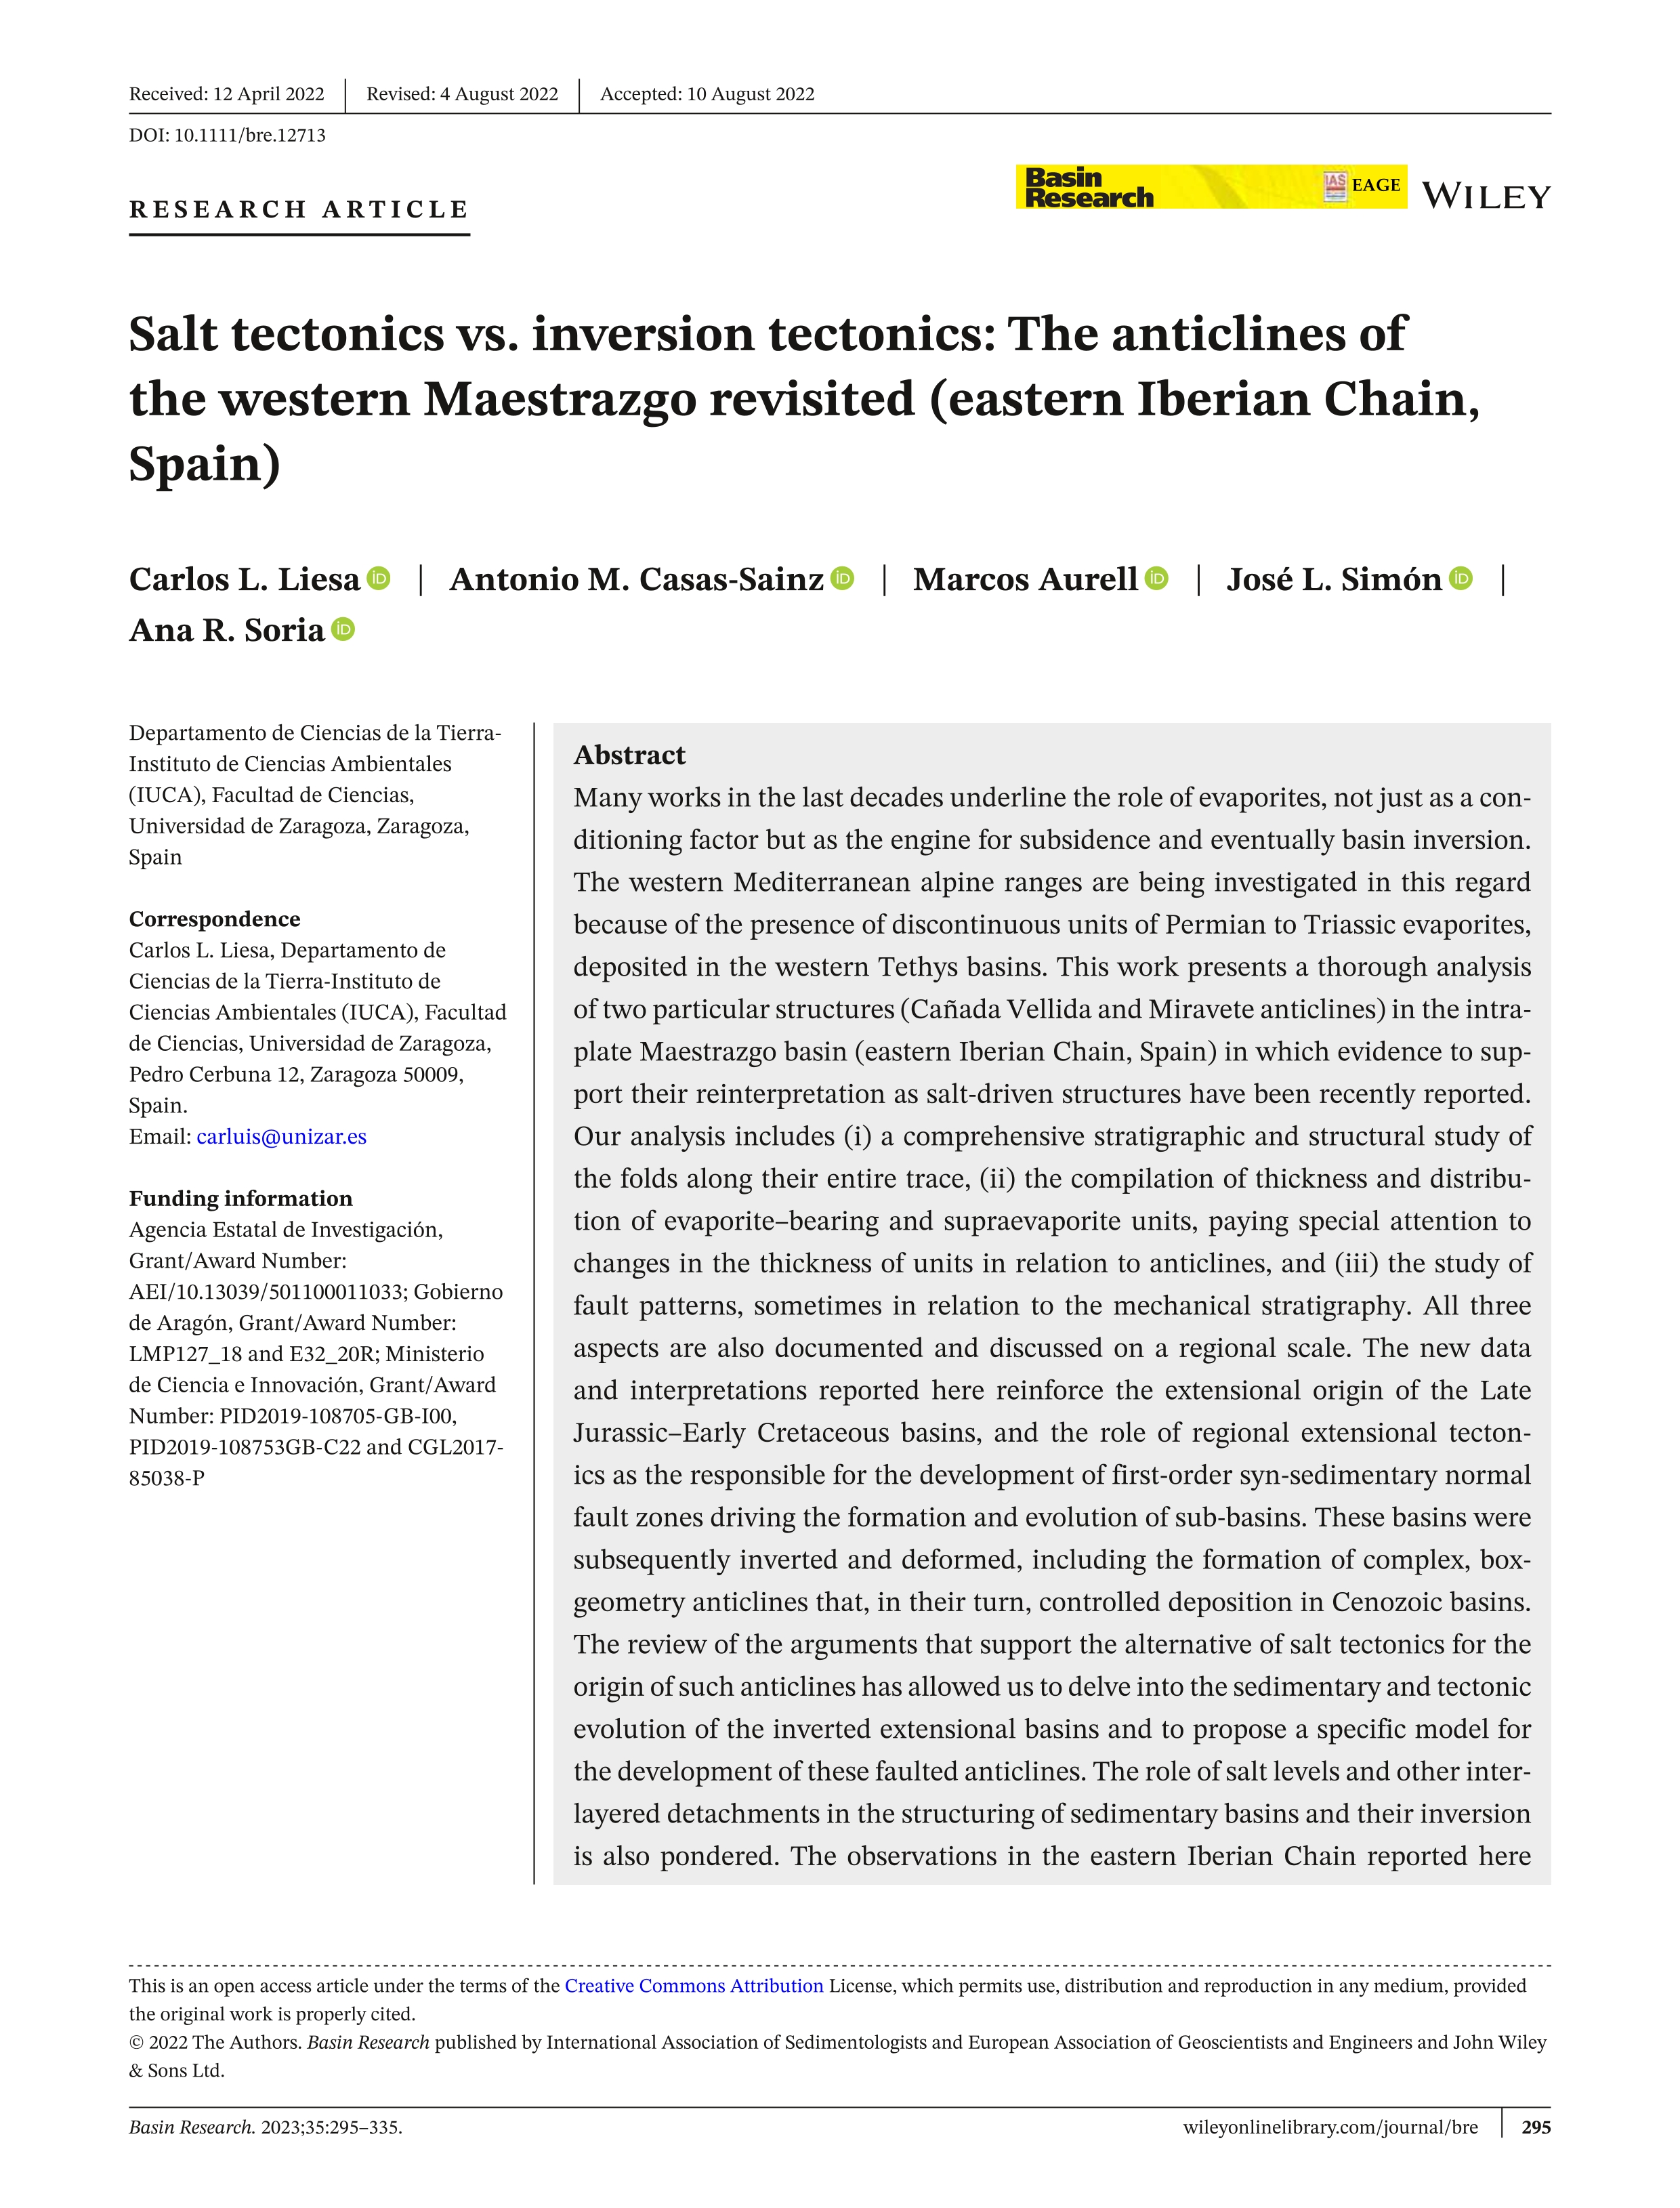 Salt tectonics vs. inversion tectonics: The anticlines of the western Maestrazgo revisited (eastern Iberian Chain, Spain)